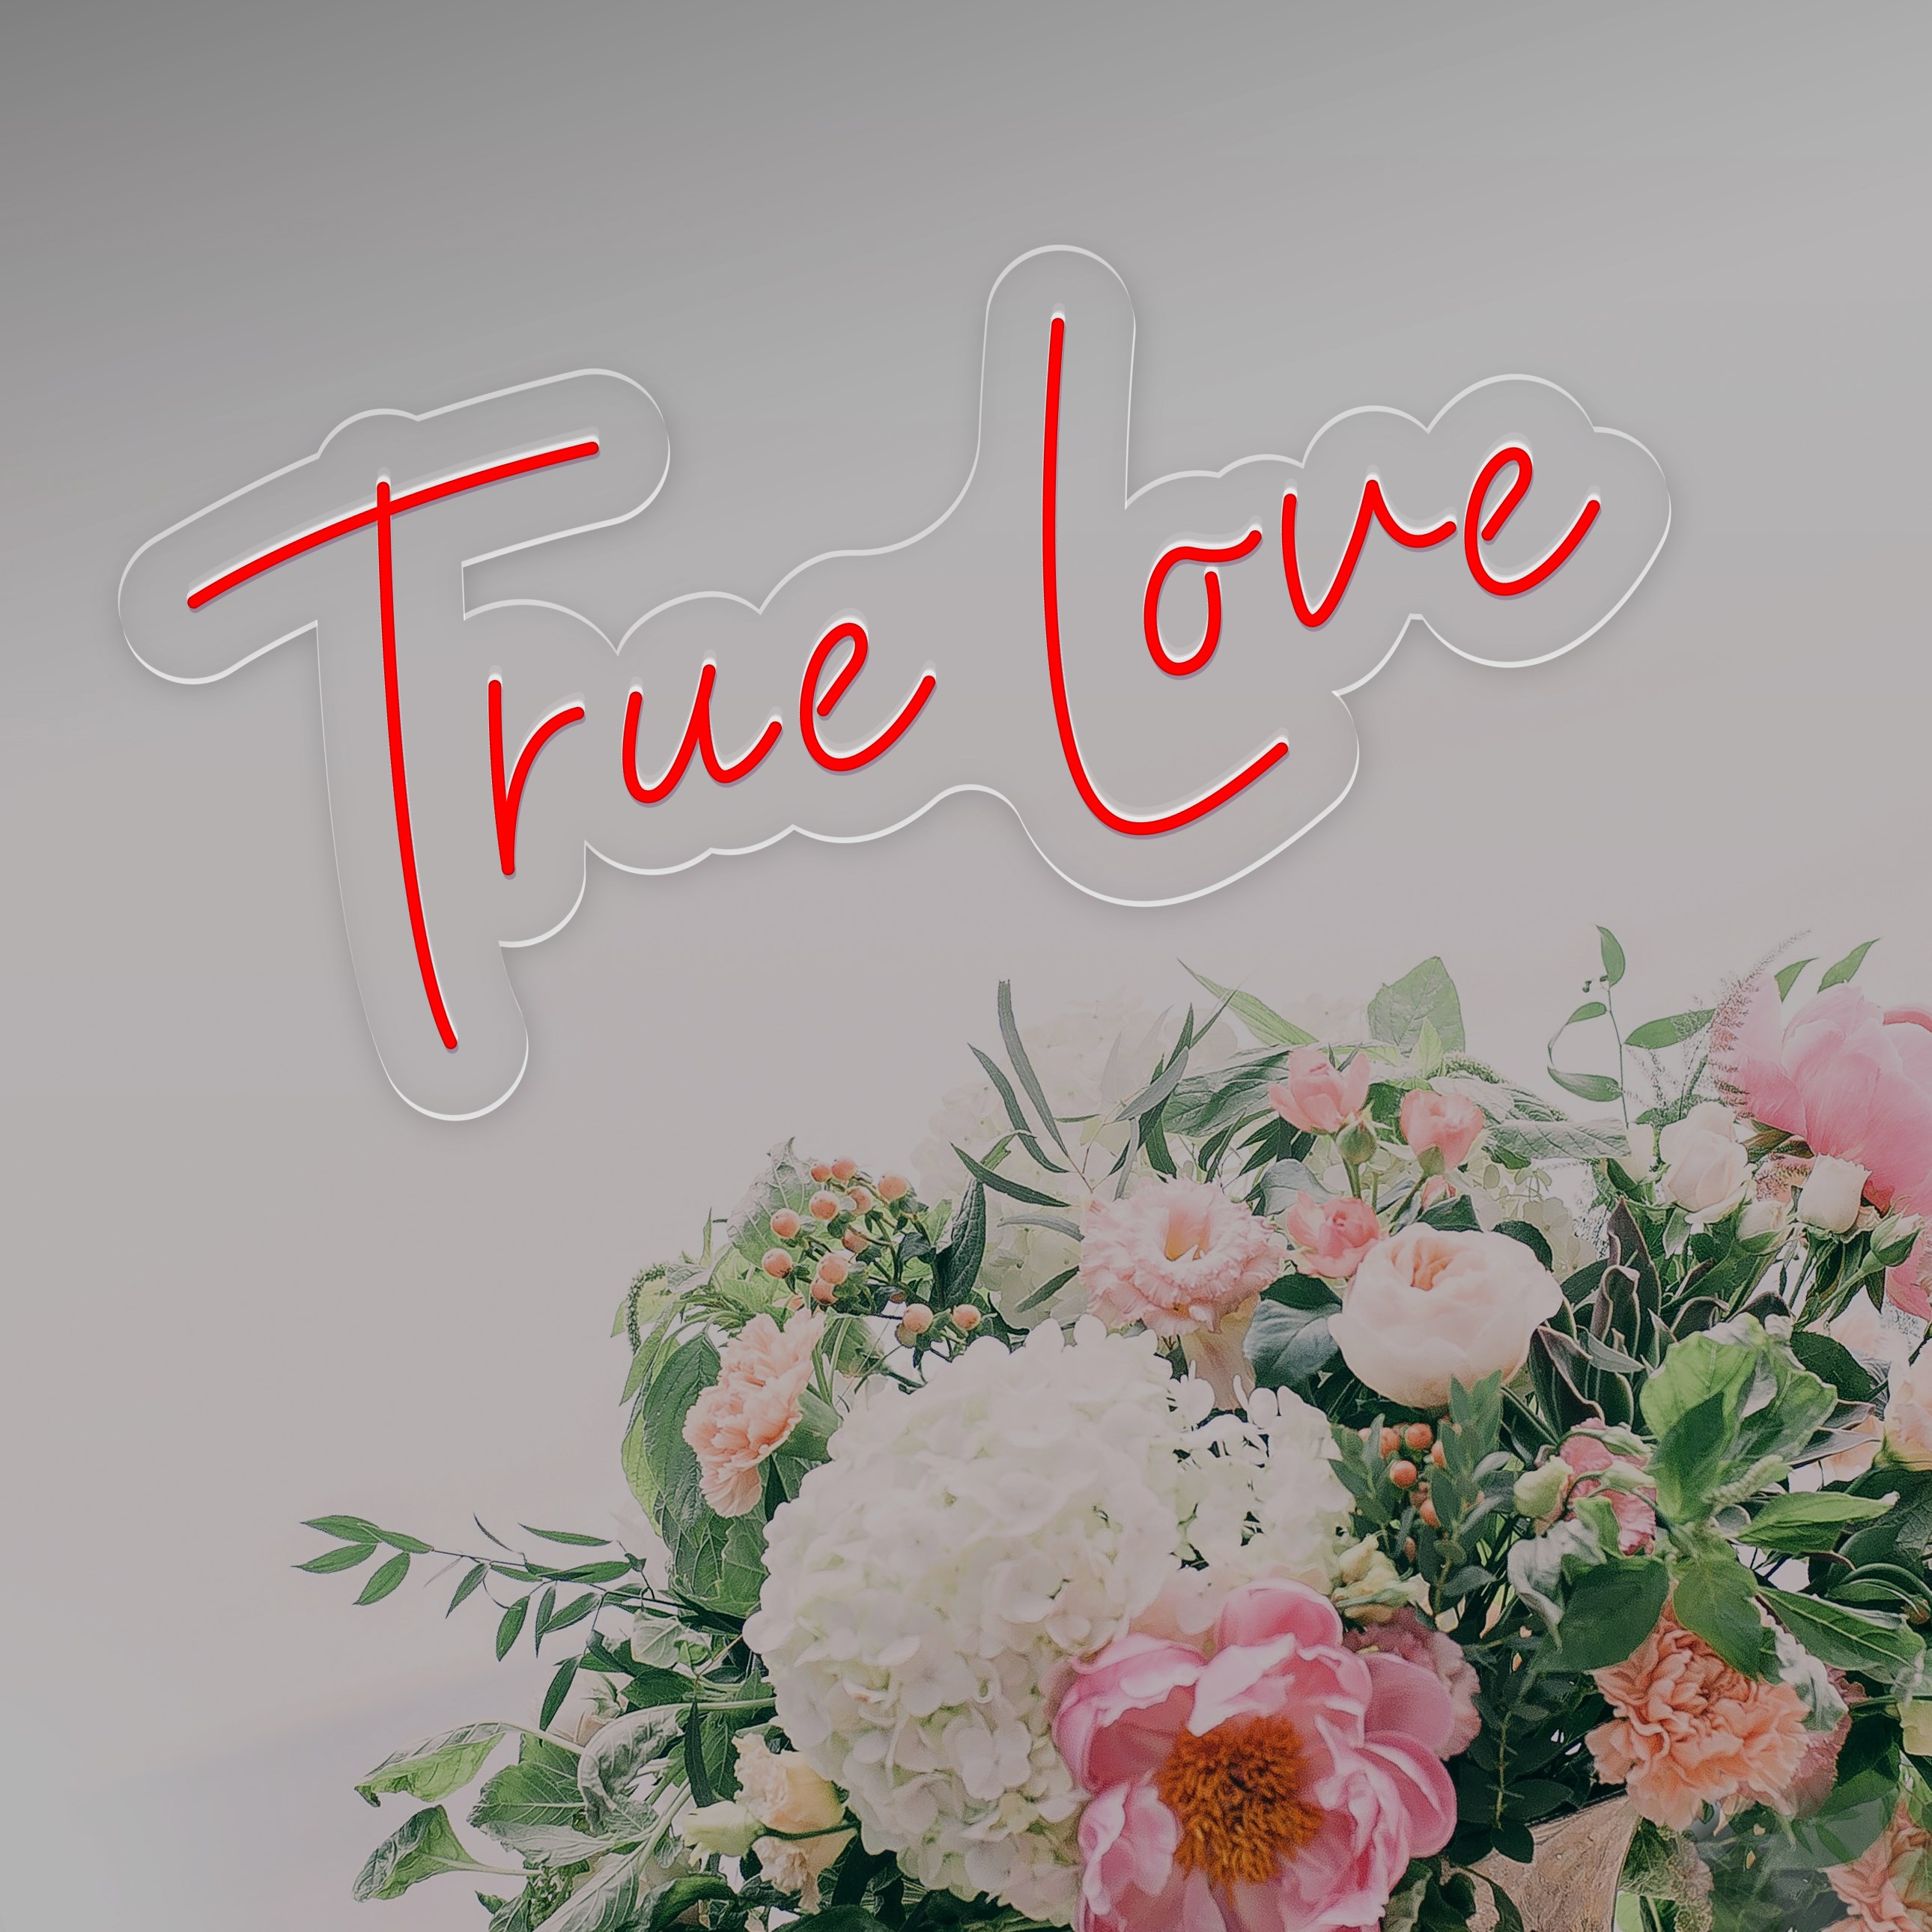 Image de Neon "True love"